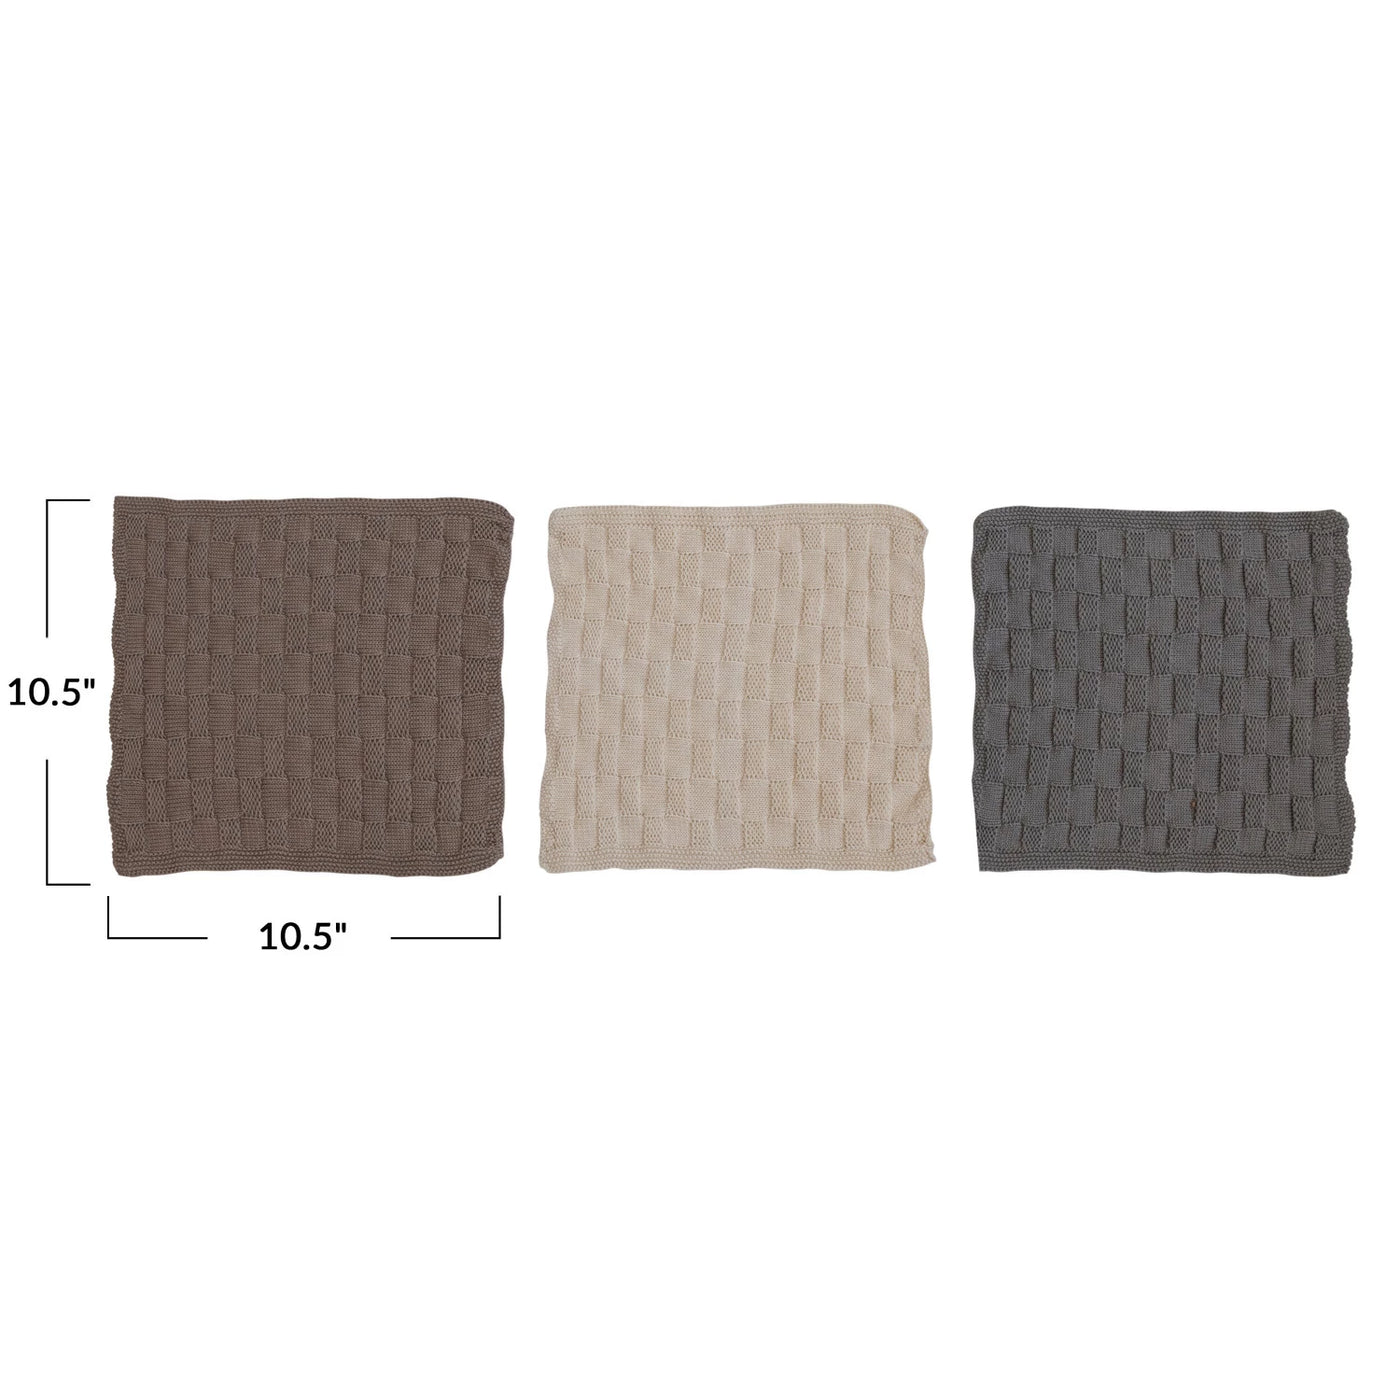 Cotton Blend Dish Towels w/ Weave Pattern, 3 Colors, Set of 3